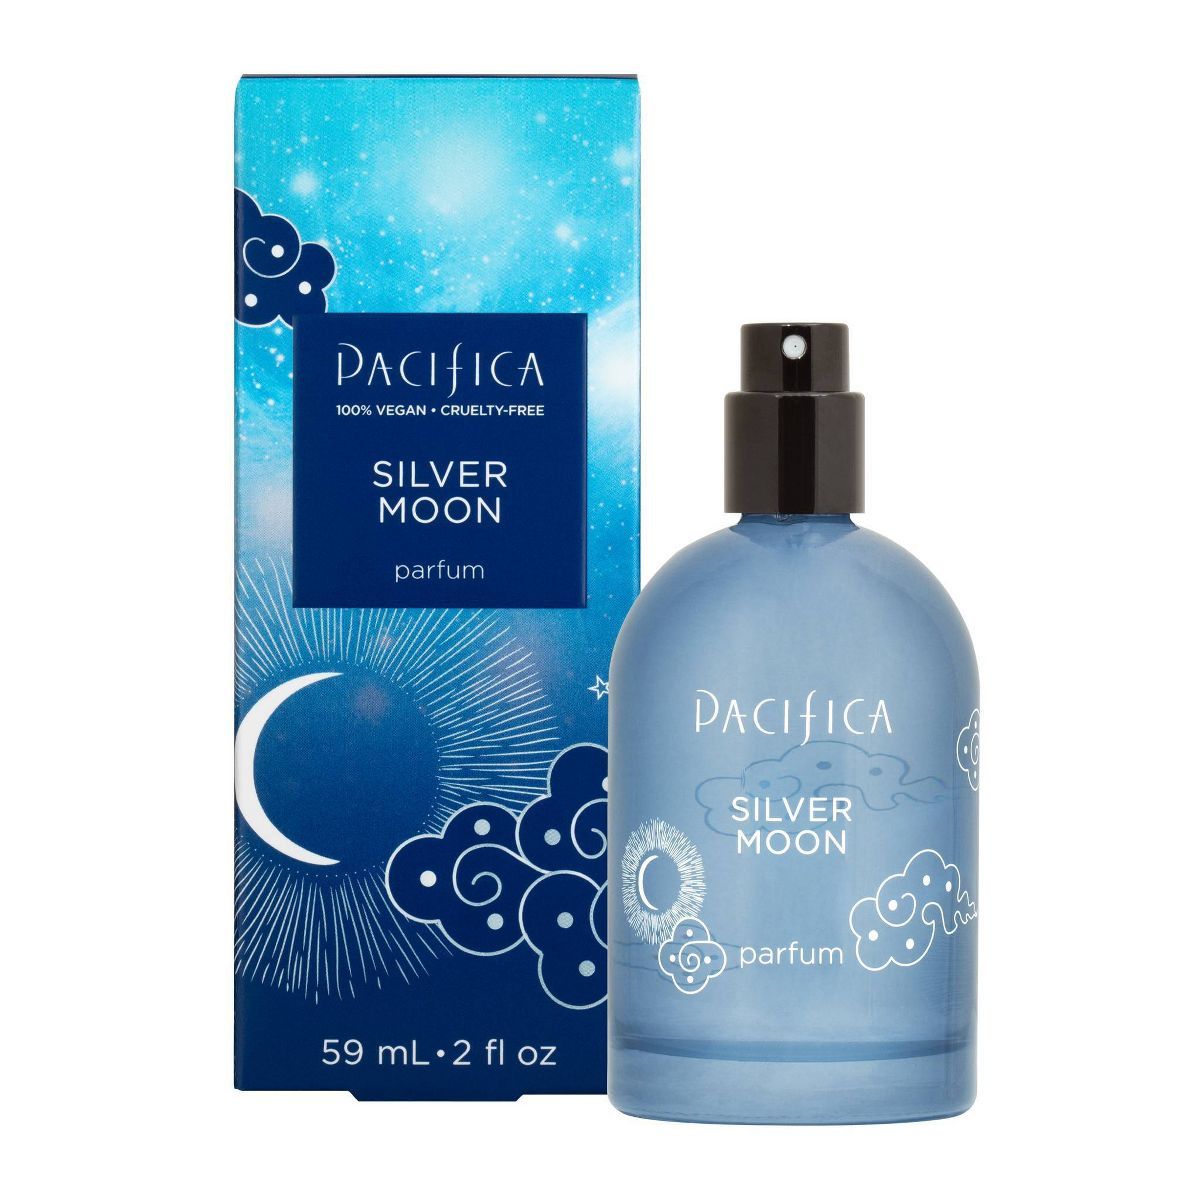 Pacifica Silver Moon Spray Perfume - 2 fl oz | Target